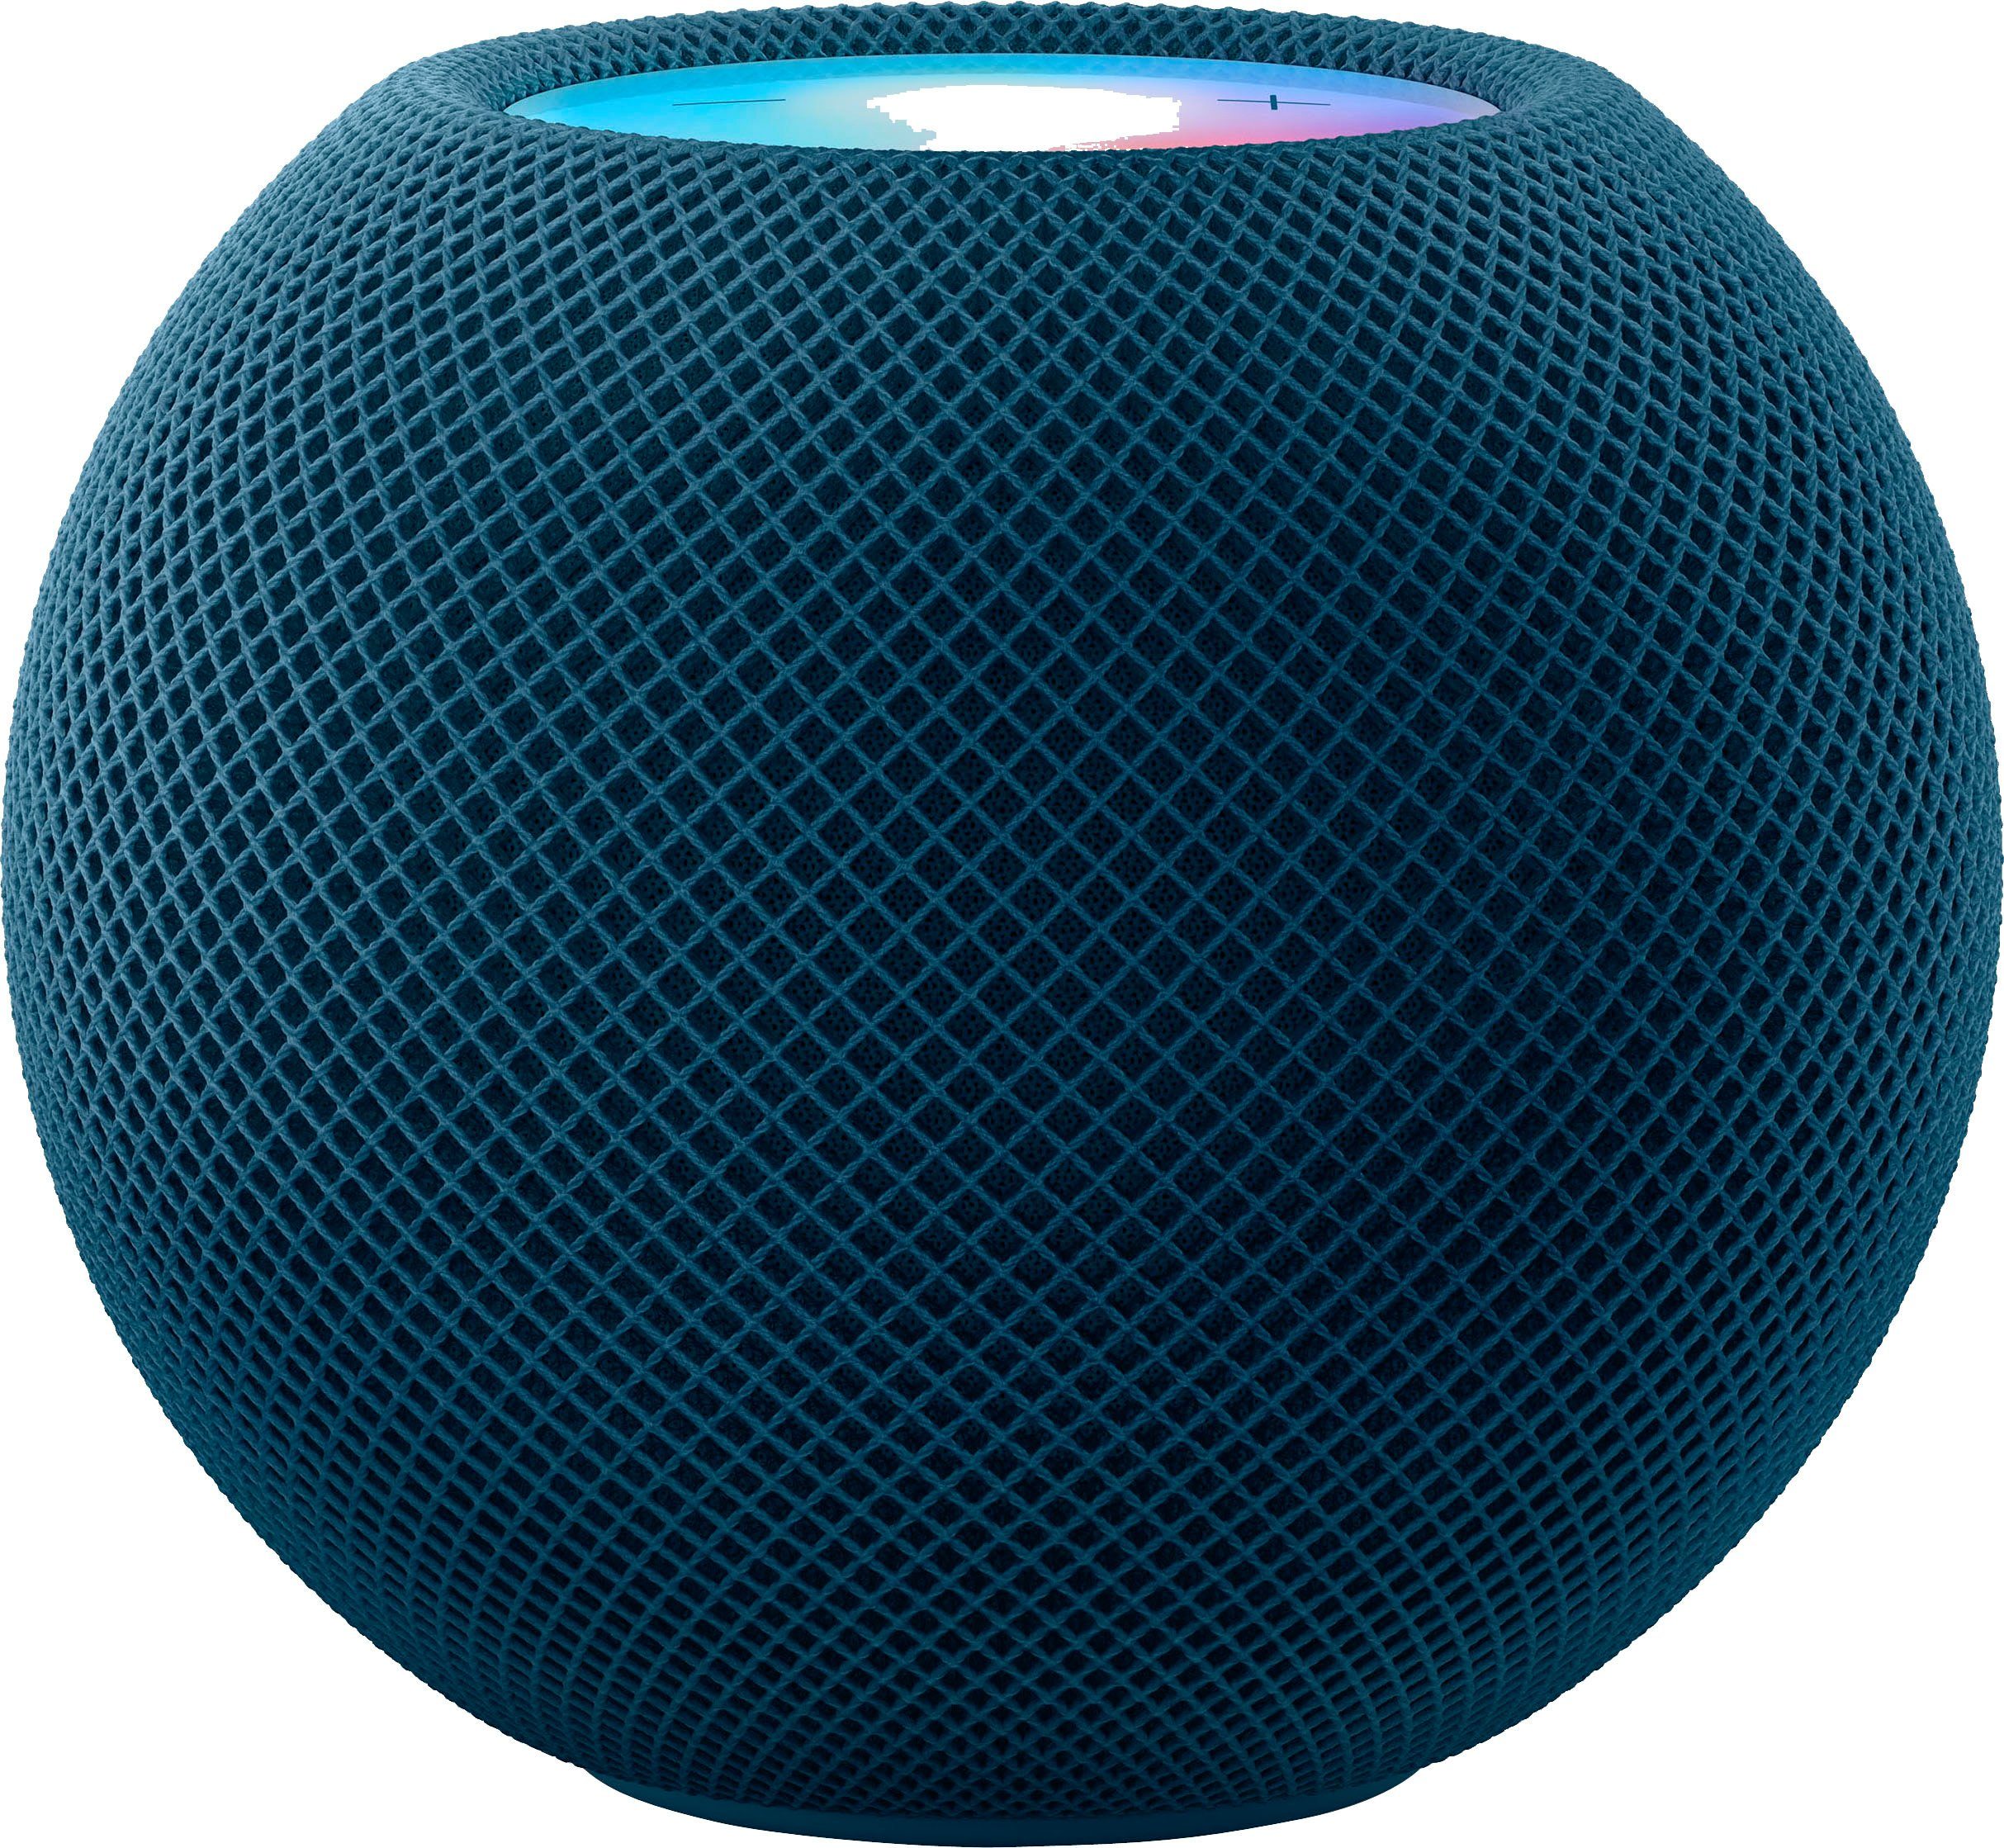 Apple HomePod (WiFi) mini WLAN Lautsprecher (Bluetooth, blau